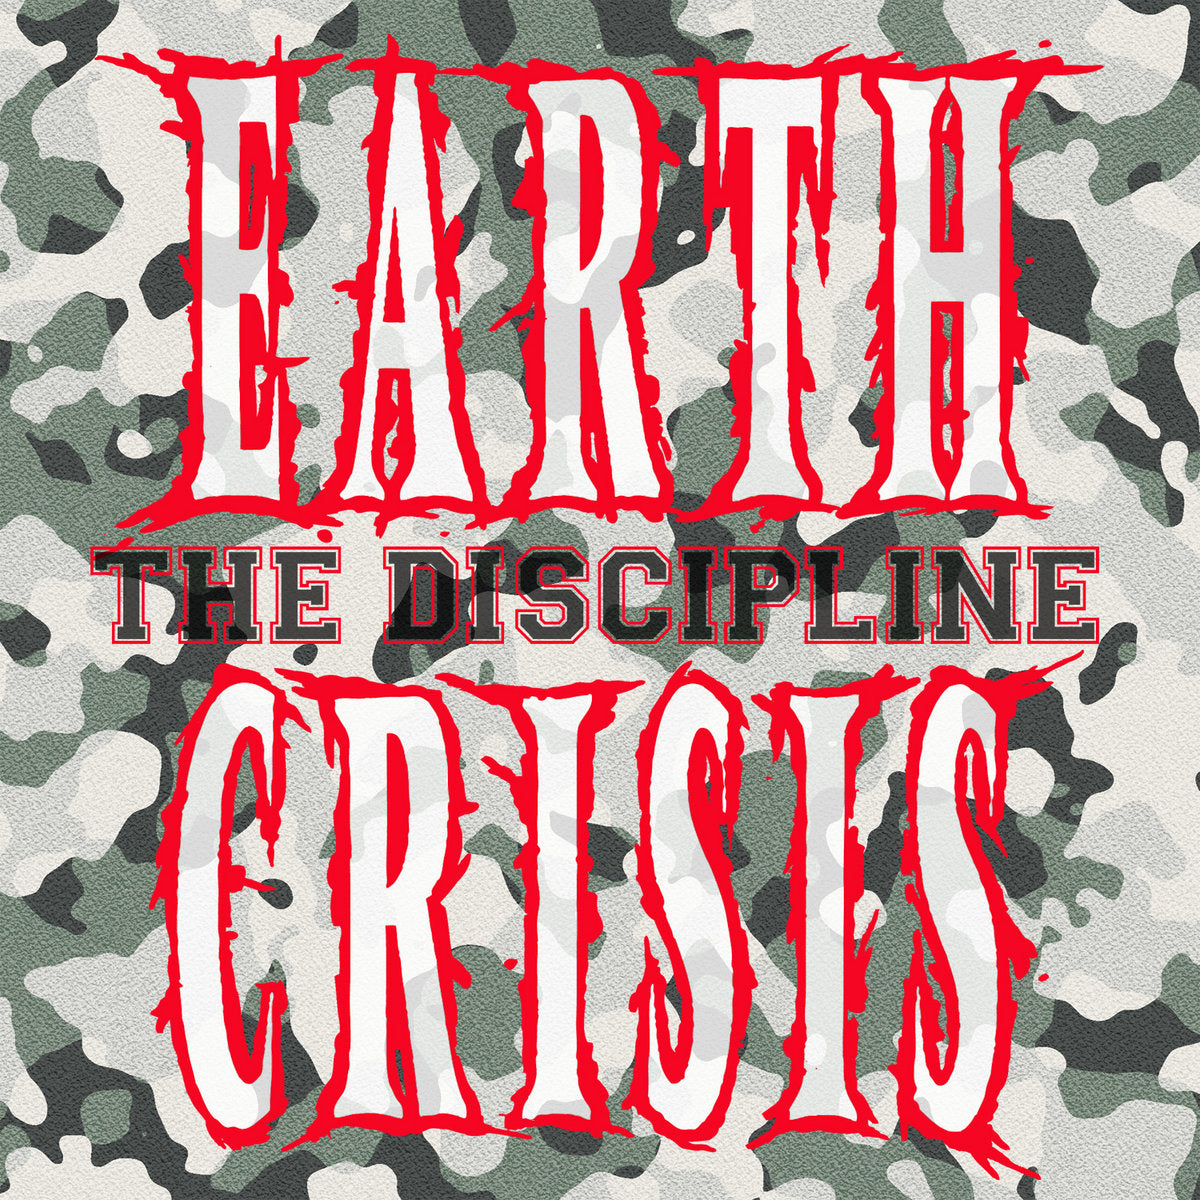 Earth Crisis "The Discipline" 7" Vinyl